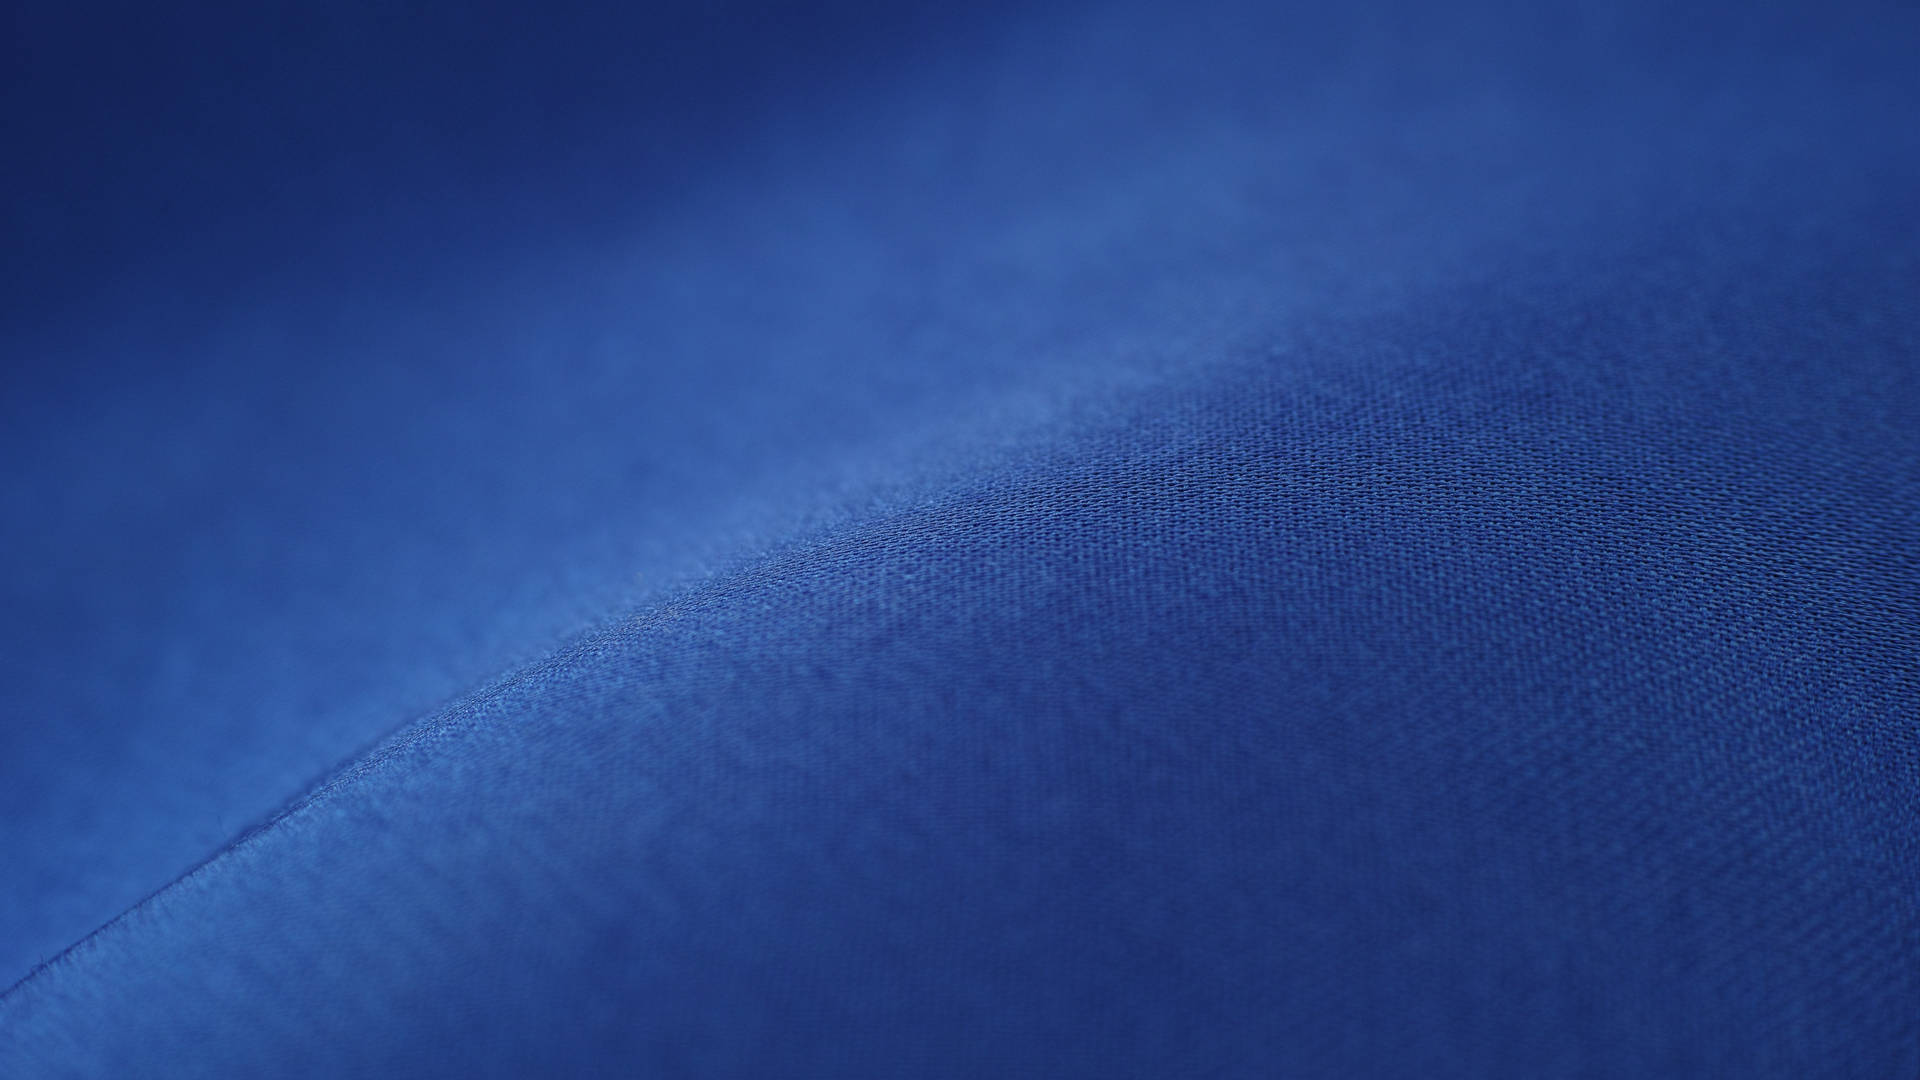 4d Ultra Hd Blue Fabric Wallpaper